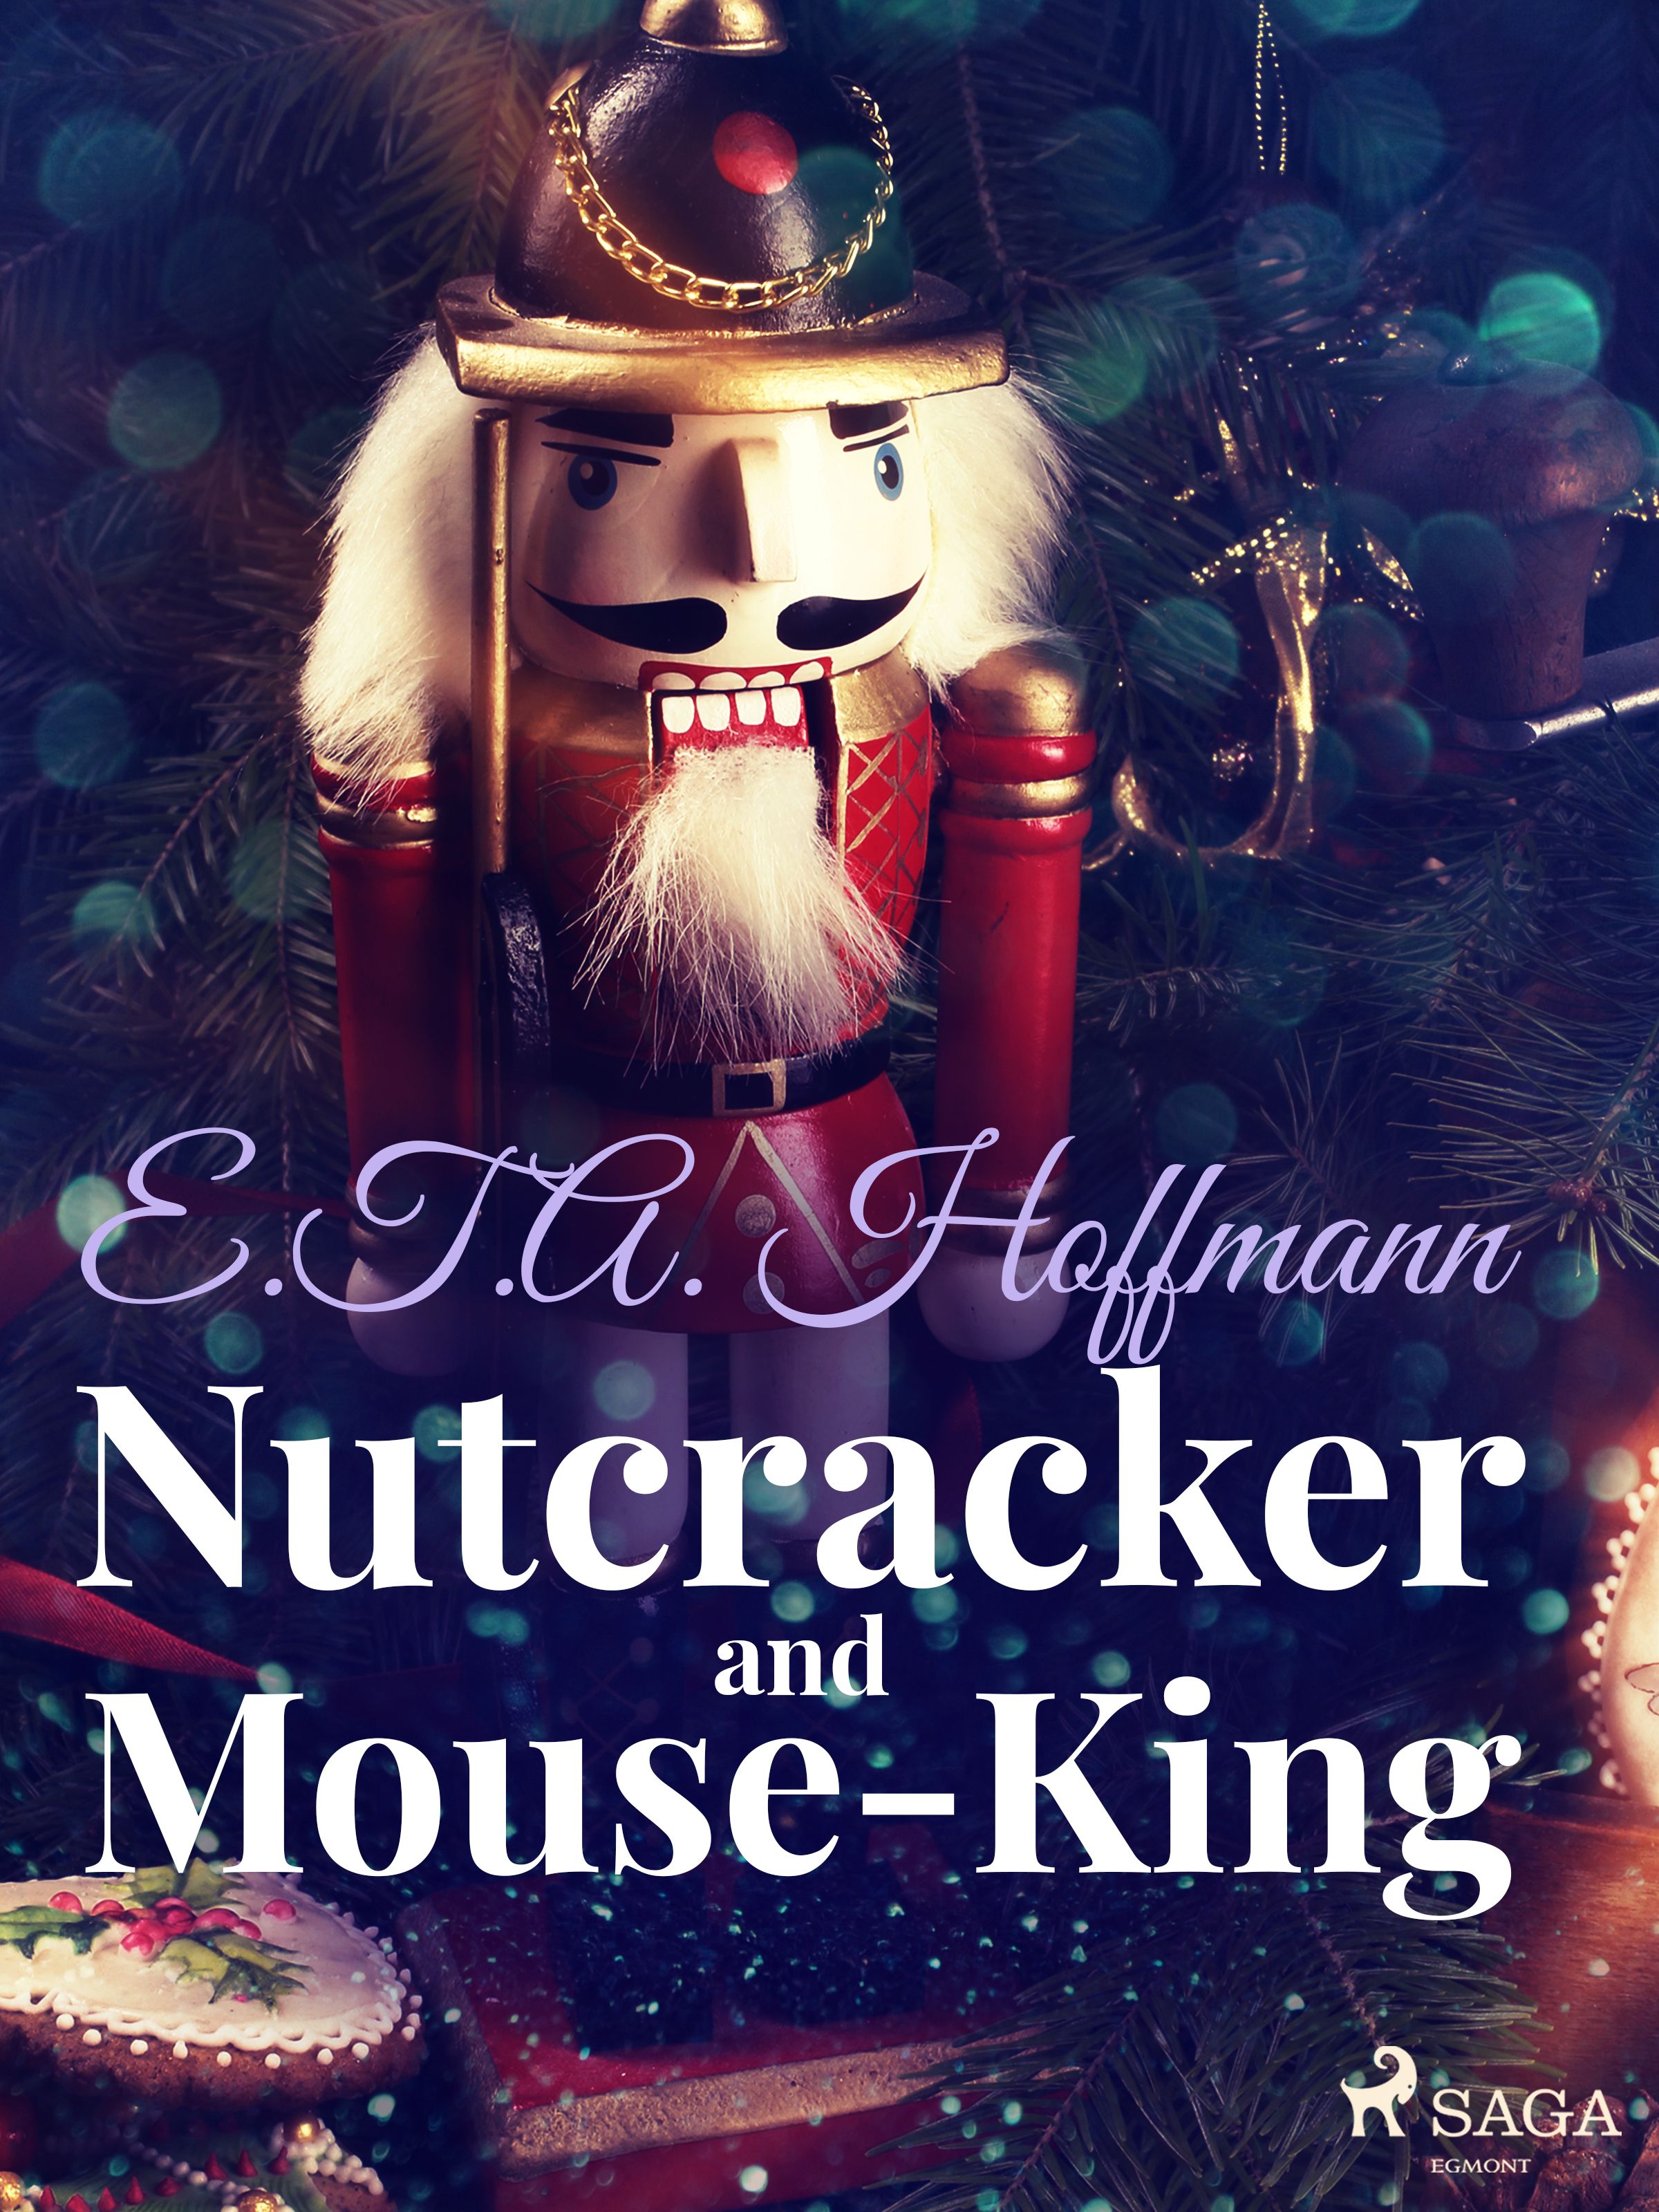 Nutcracker and Mouse-King, e-bog af E.T.A. Hoffmann